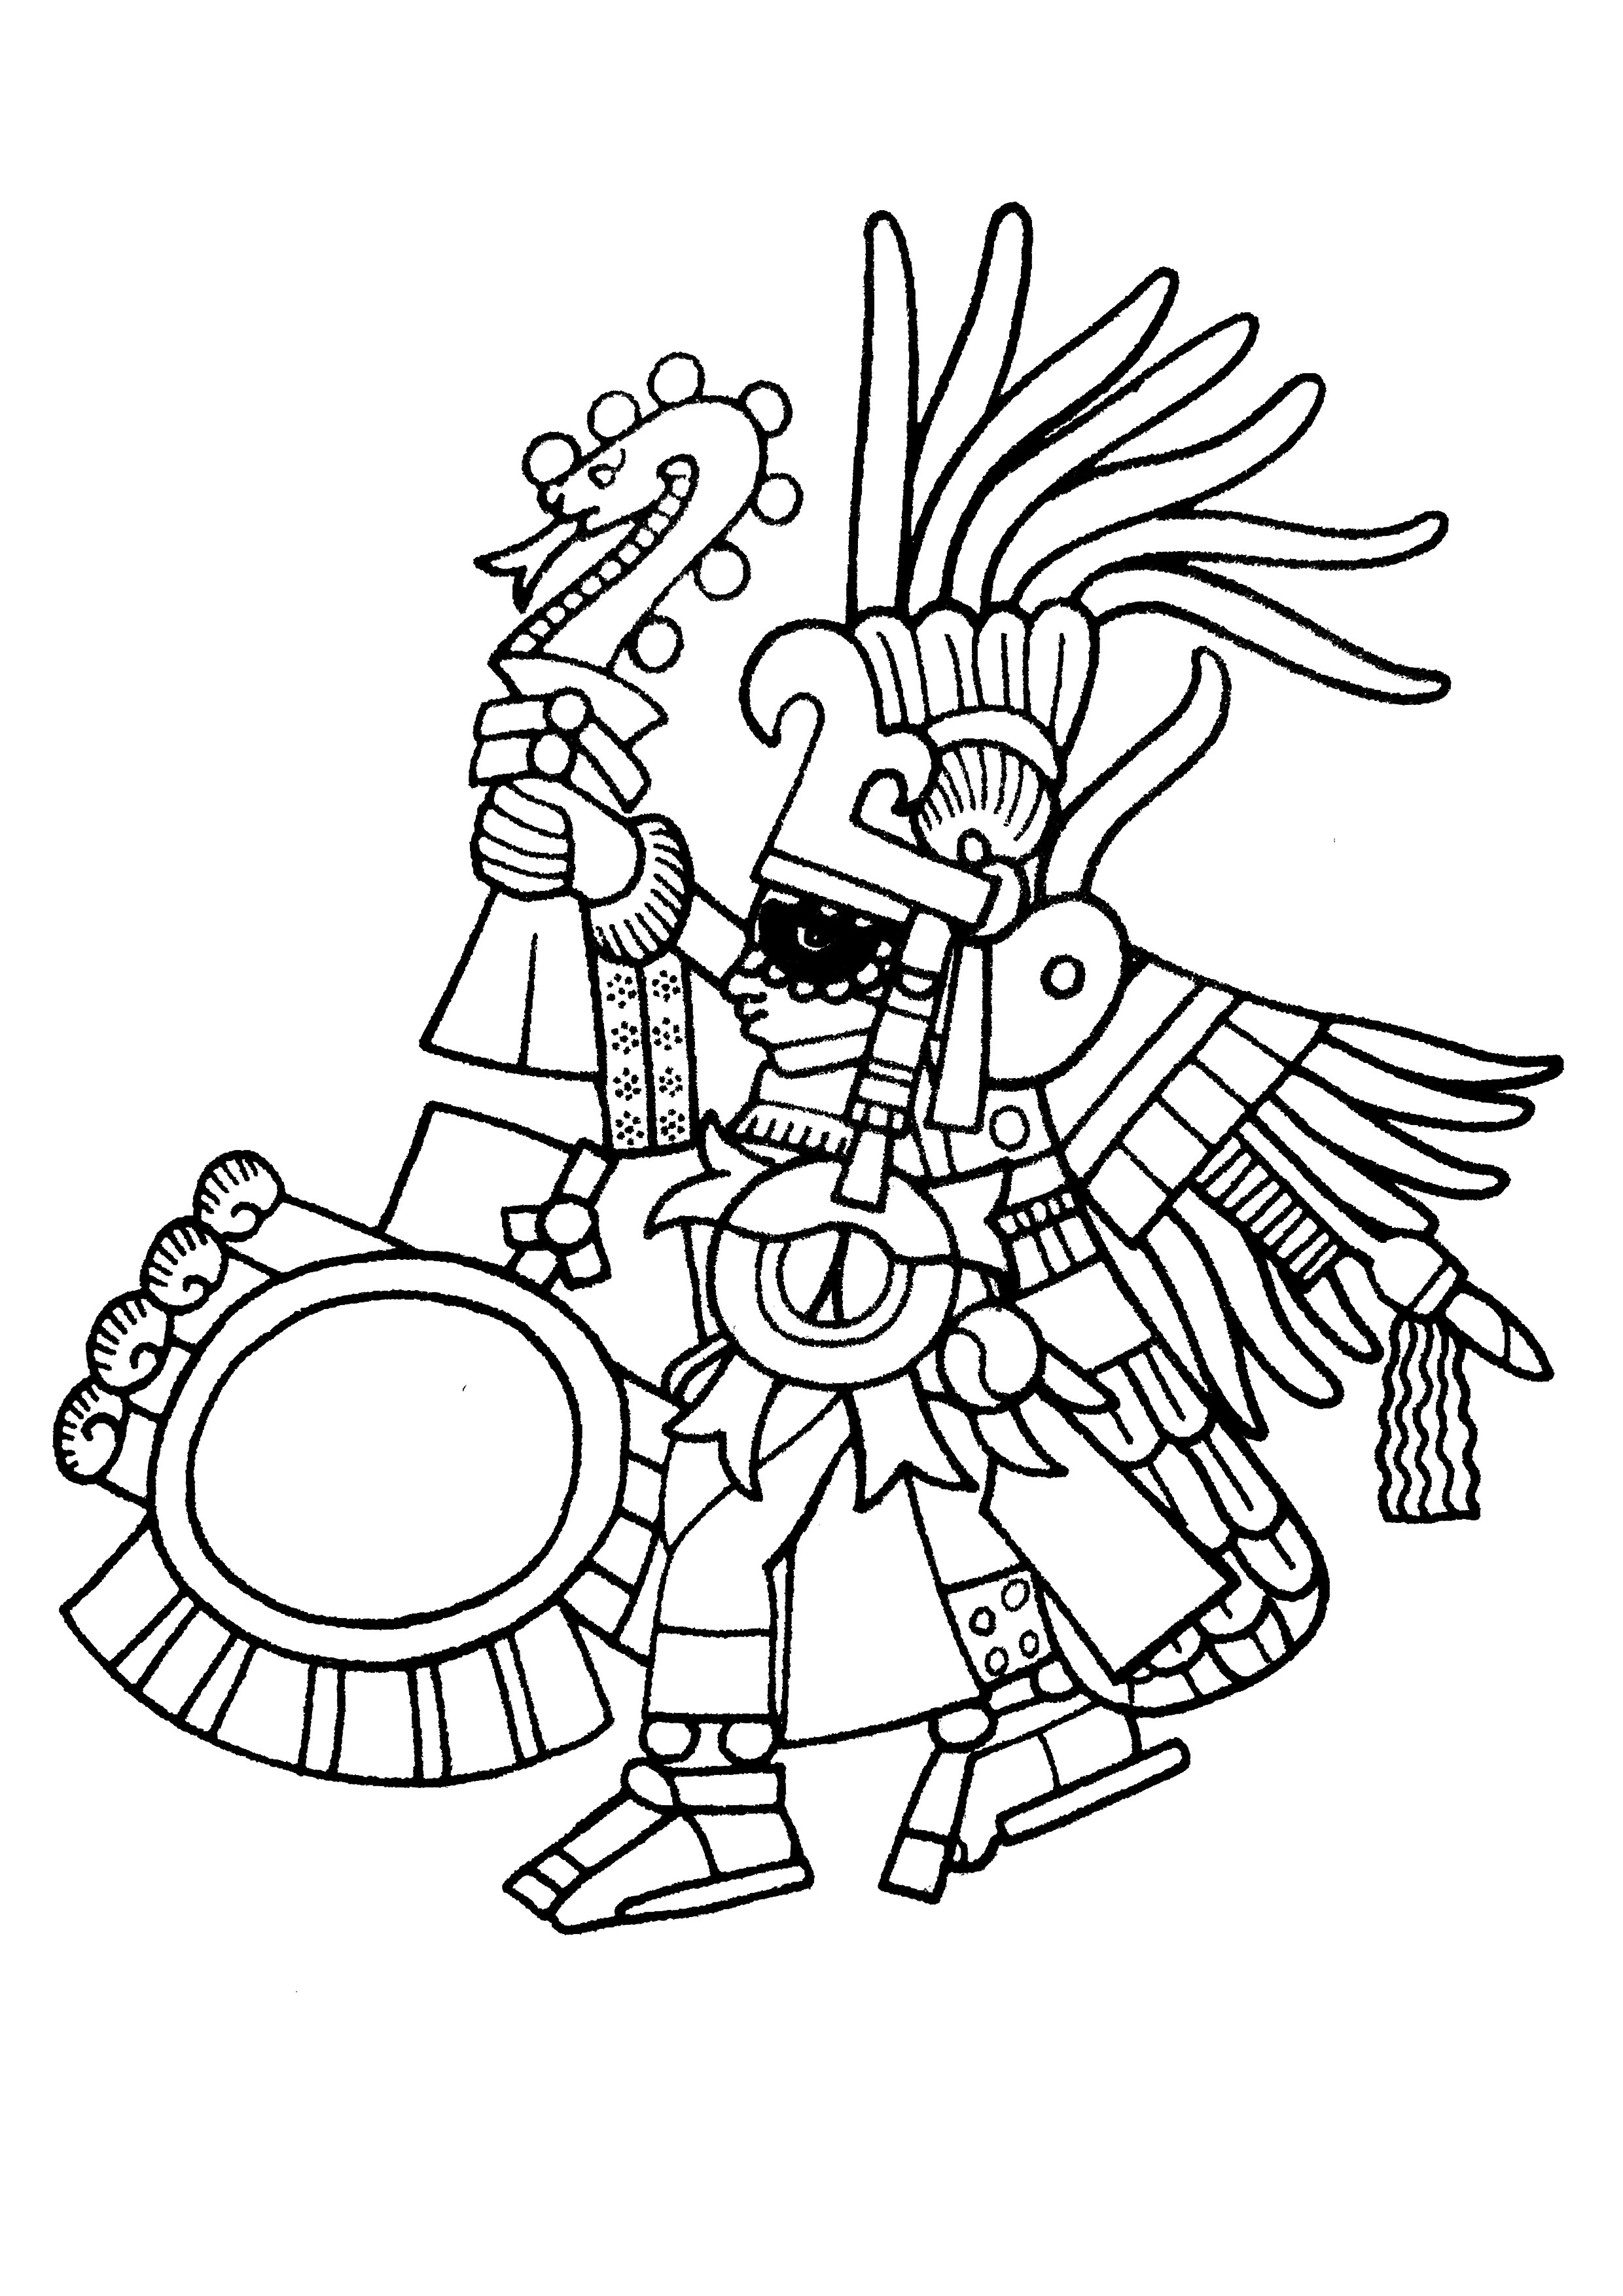 Huitzilopochtli, the Aztec supreme deity and God of War, brandishes aloft a Xiuhcoatl fire serpent staff